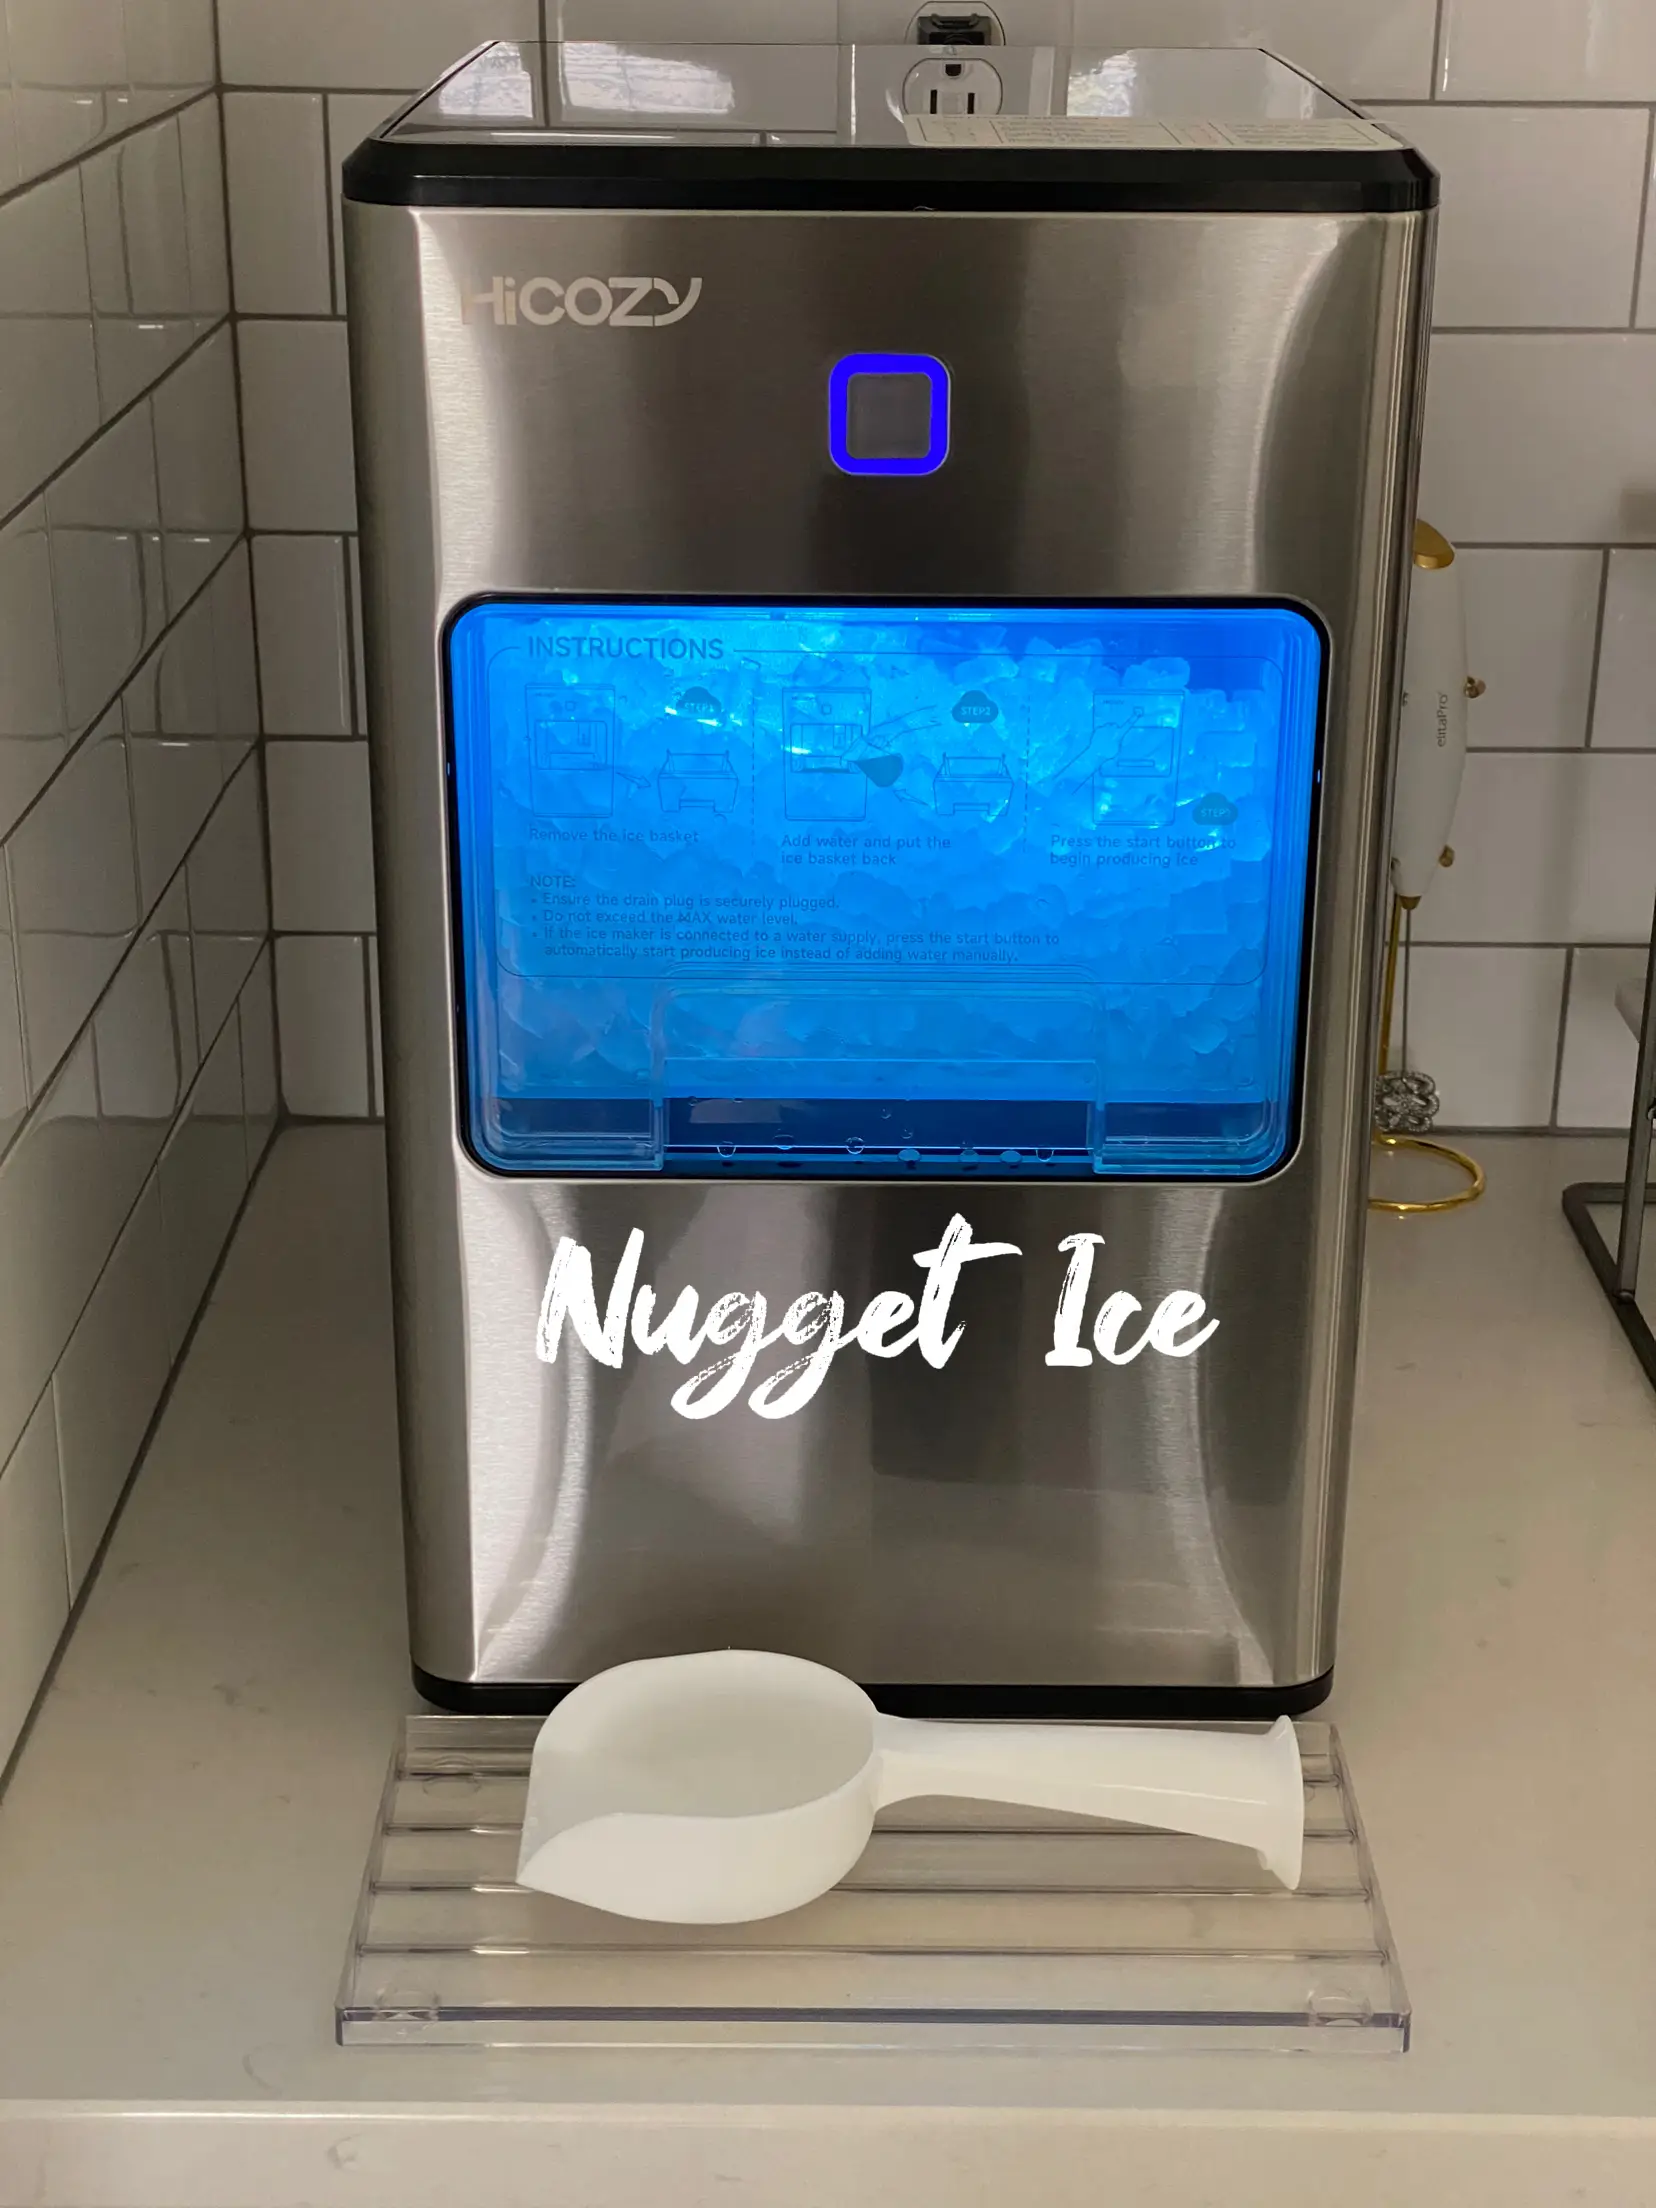 HiCOZY Nugget Ice Maker Countertop, Portable Compact Ice Maker 